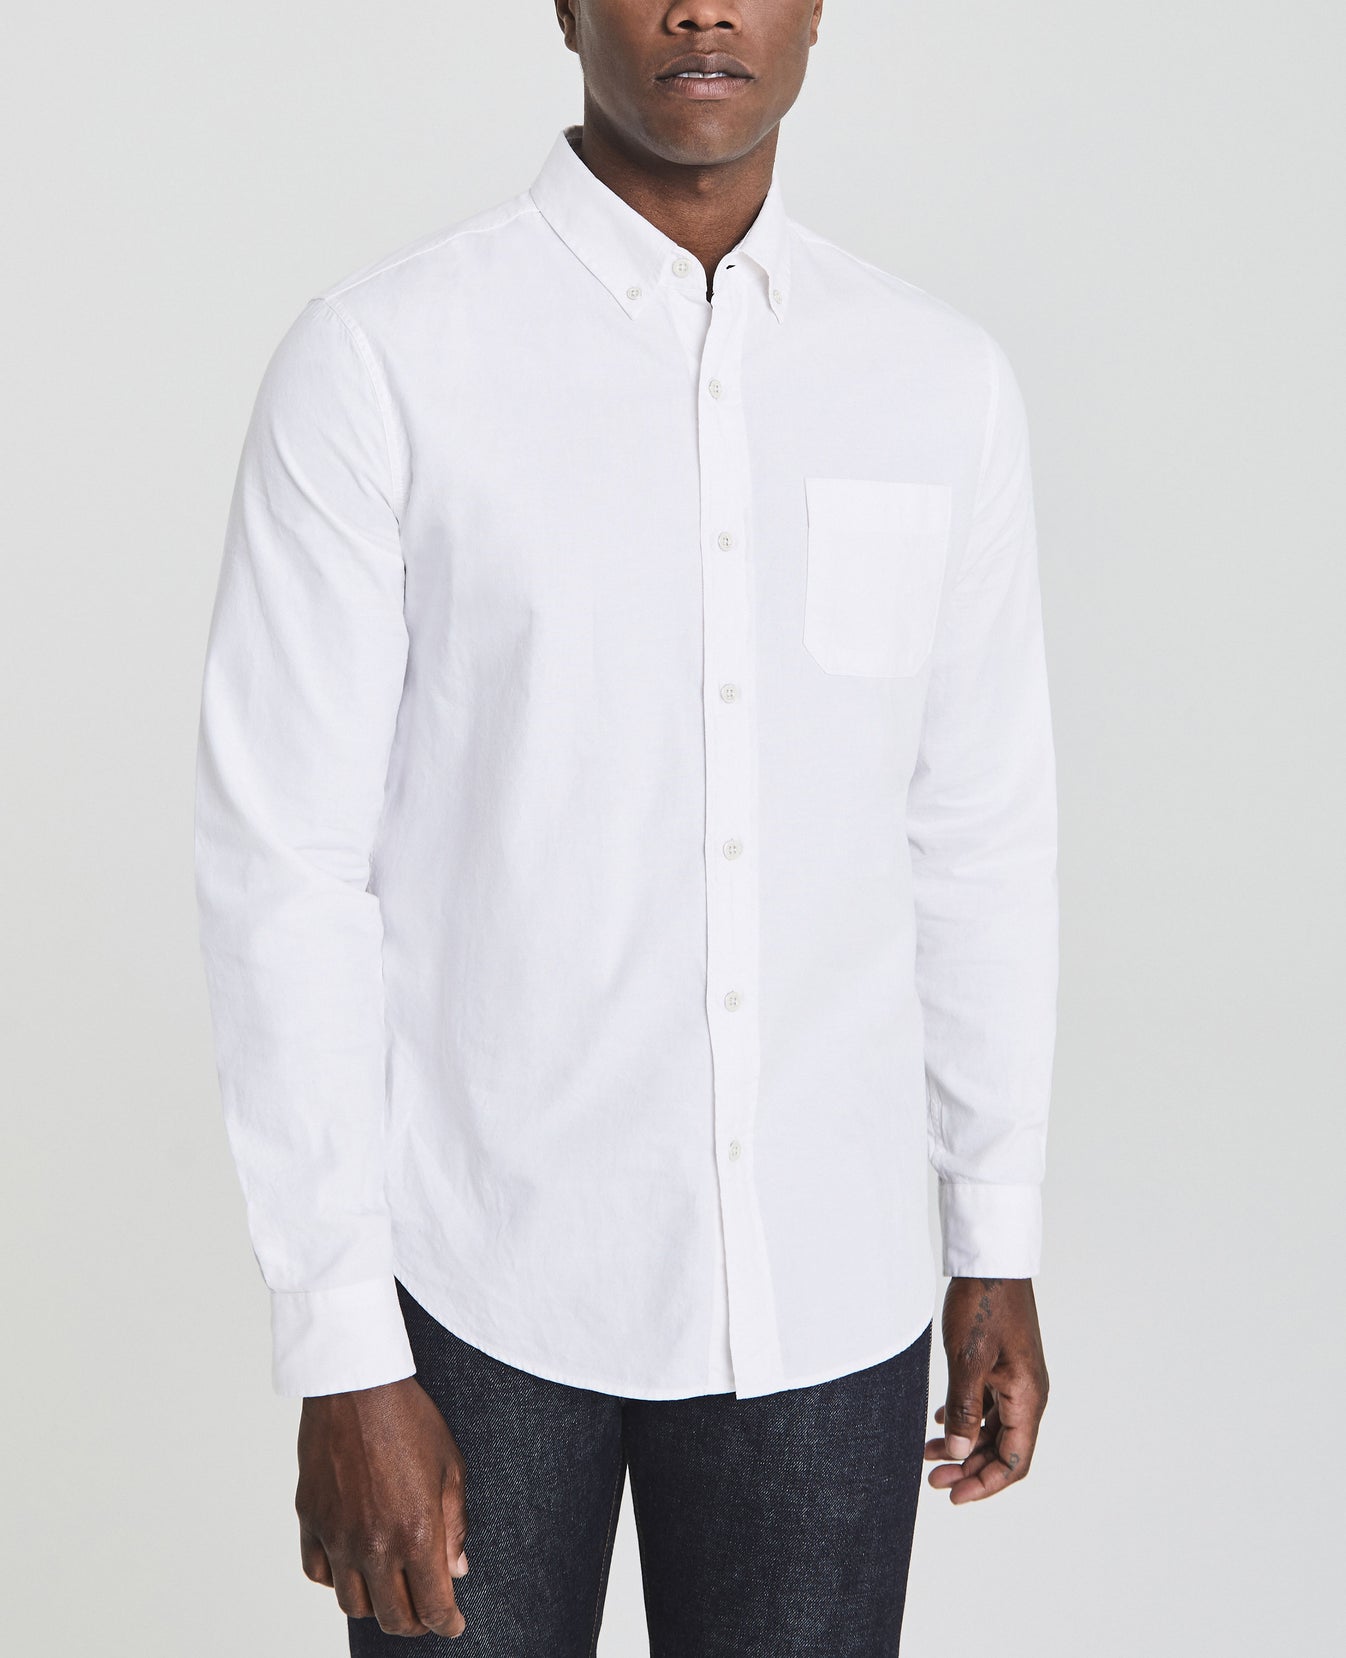 Ace Pocket Shirt Ivory Dust Long Sleeve Shirt Men Tops Photo 1